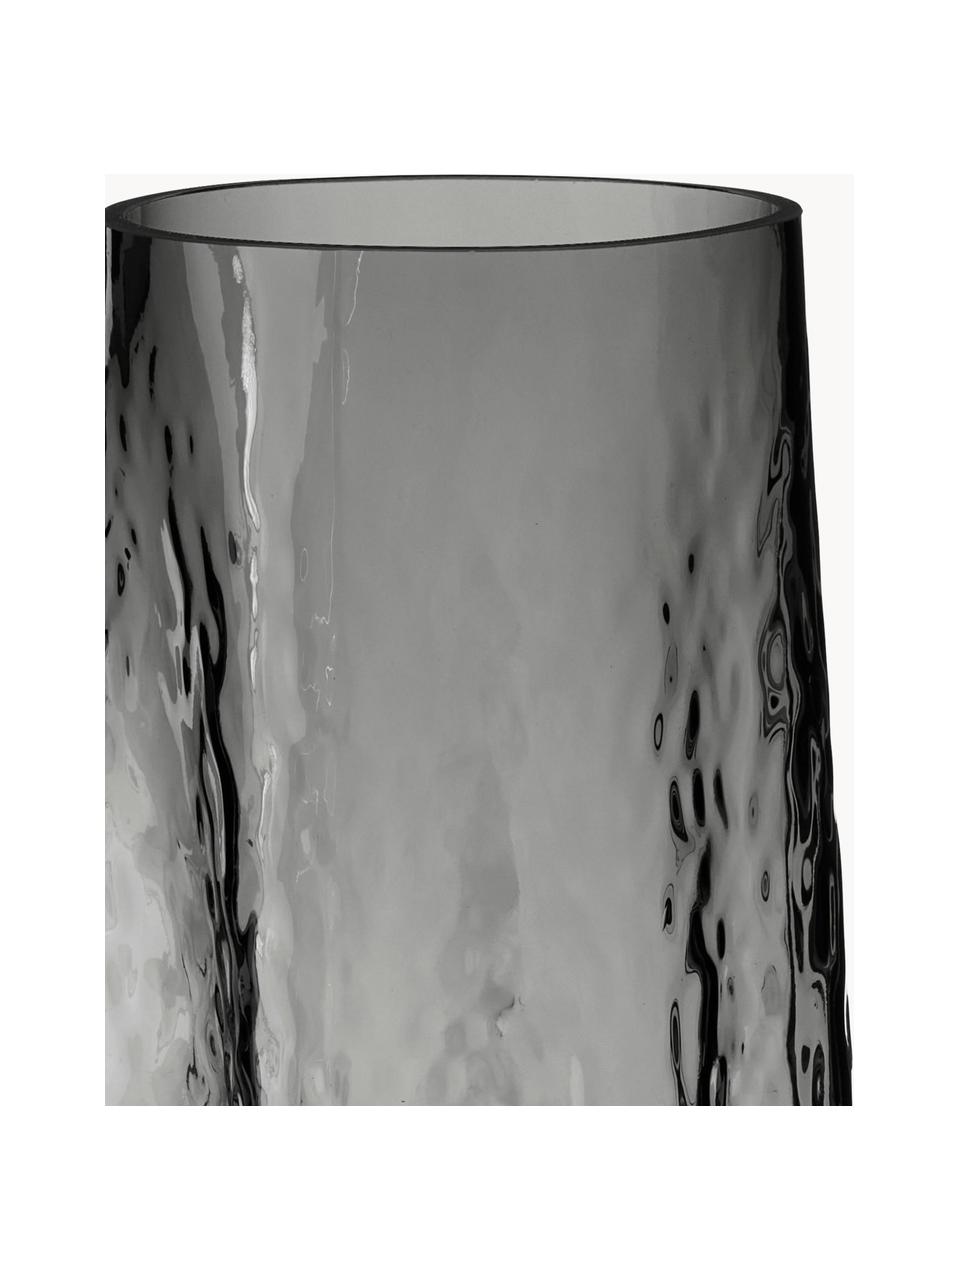 Mundgeblasene Glasvase Gry mit strukturierter Oberfläche, H 30 cm, Glas, mundgeblasen, Anthrazit, transparent, Ø 15 x H 30 cm